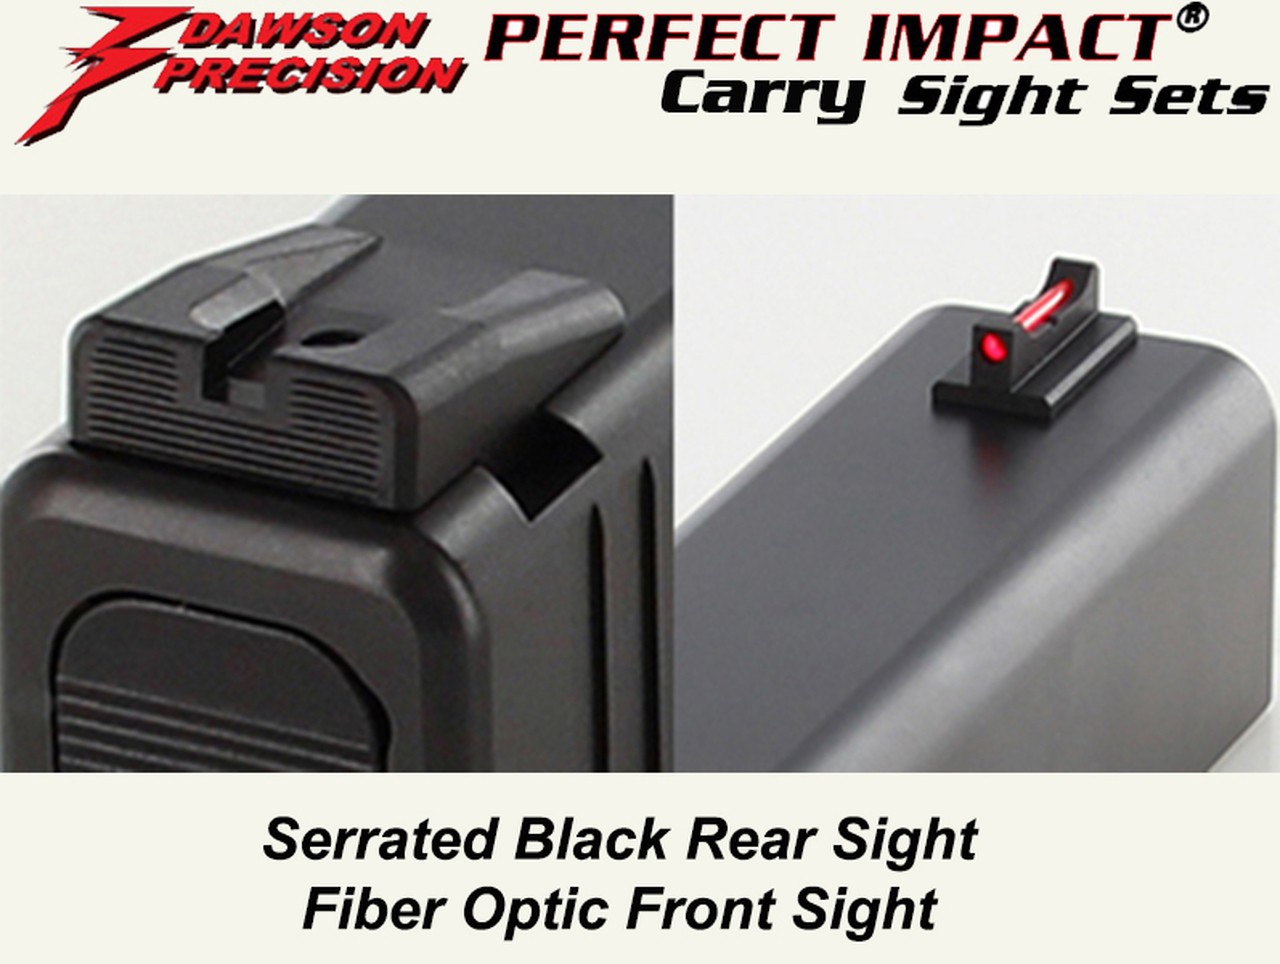 DP Glock 42 Fixed Carry Sight Set - Black Rear & Fiber Optic Front